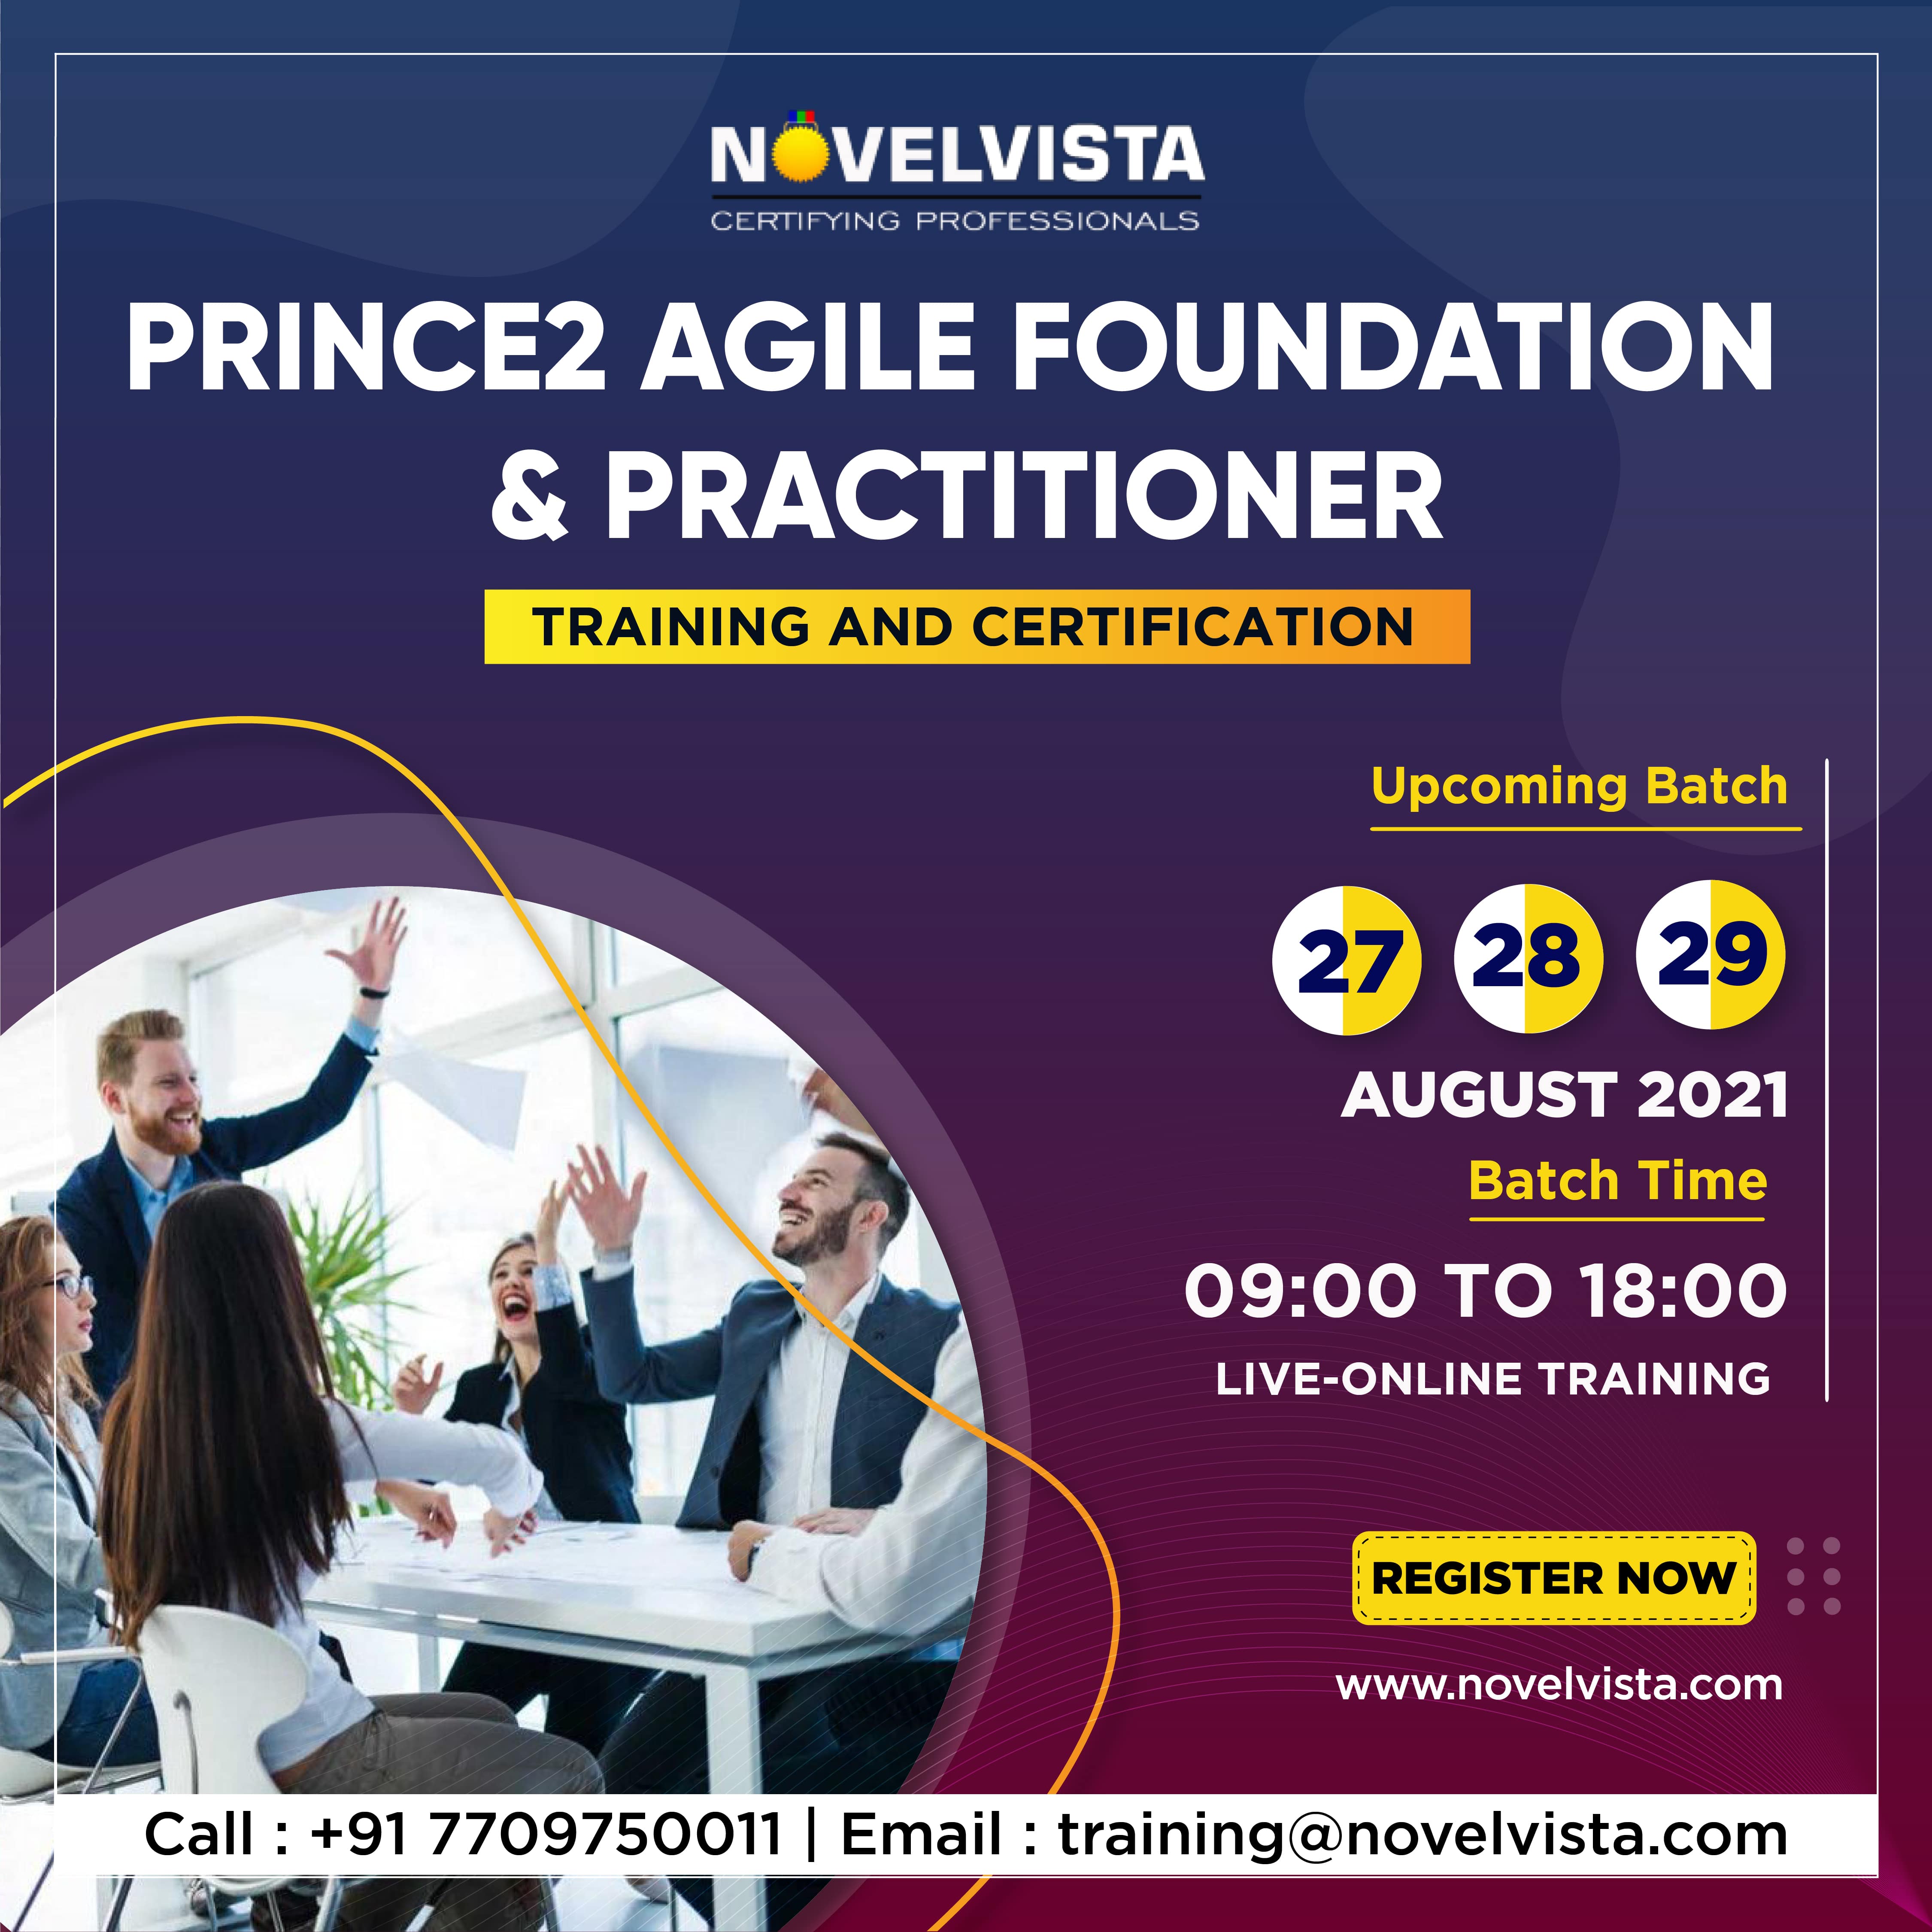 Enroll Now For PRINCE2 Agile Foundation & Practitioner Training and Certification Program., Mumbai, Maharashtra, India